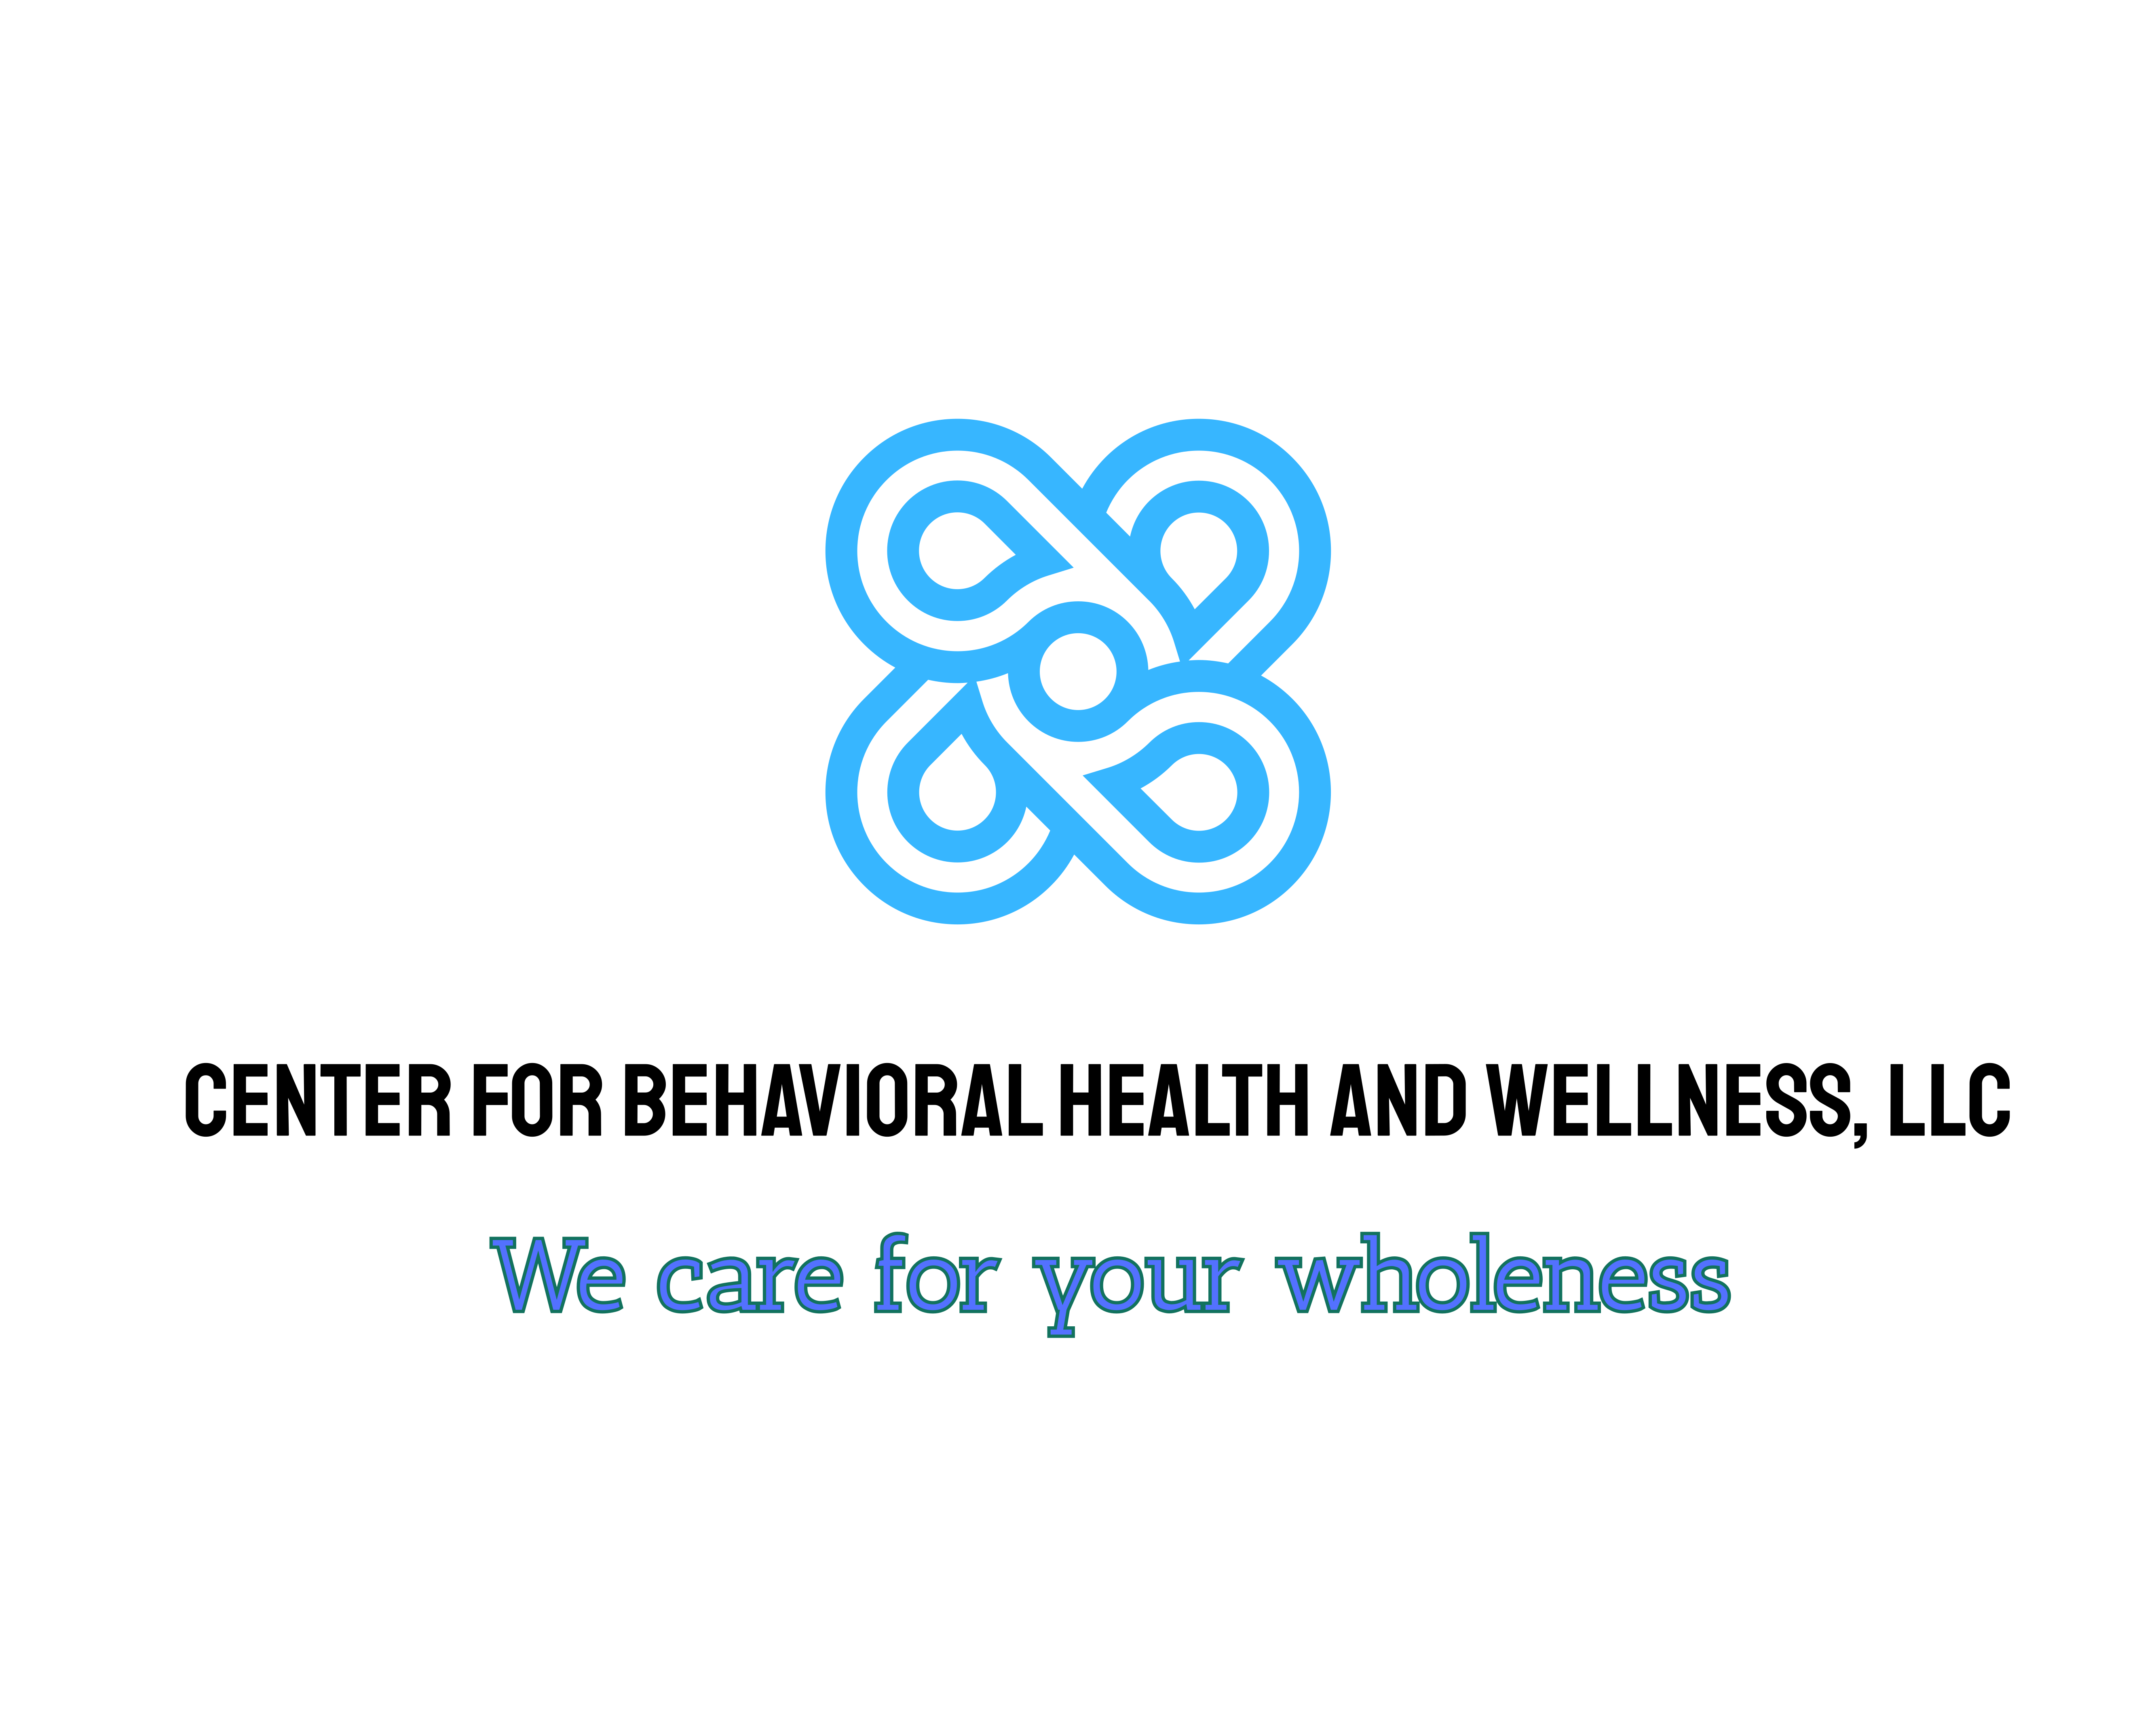 Center For Behavioral Health and Wellness logo